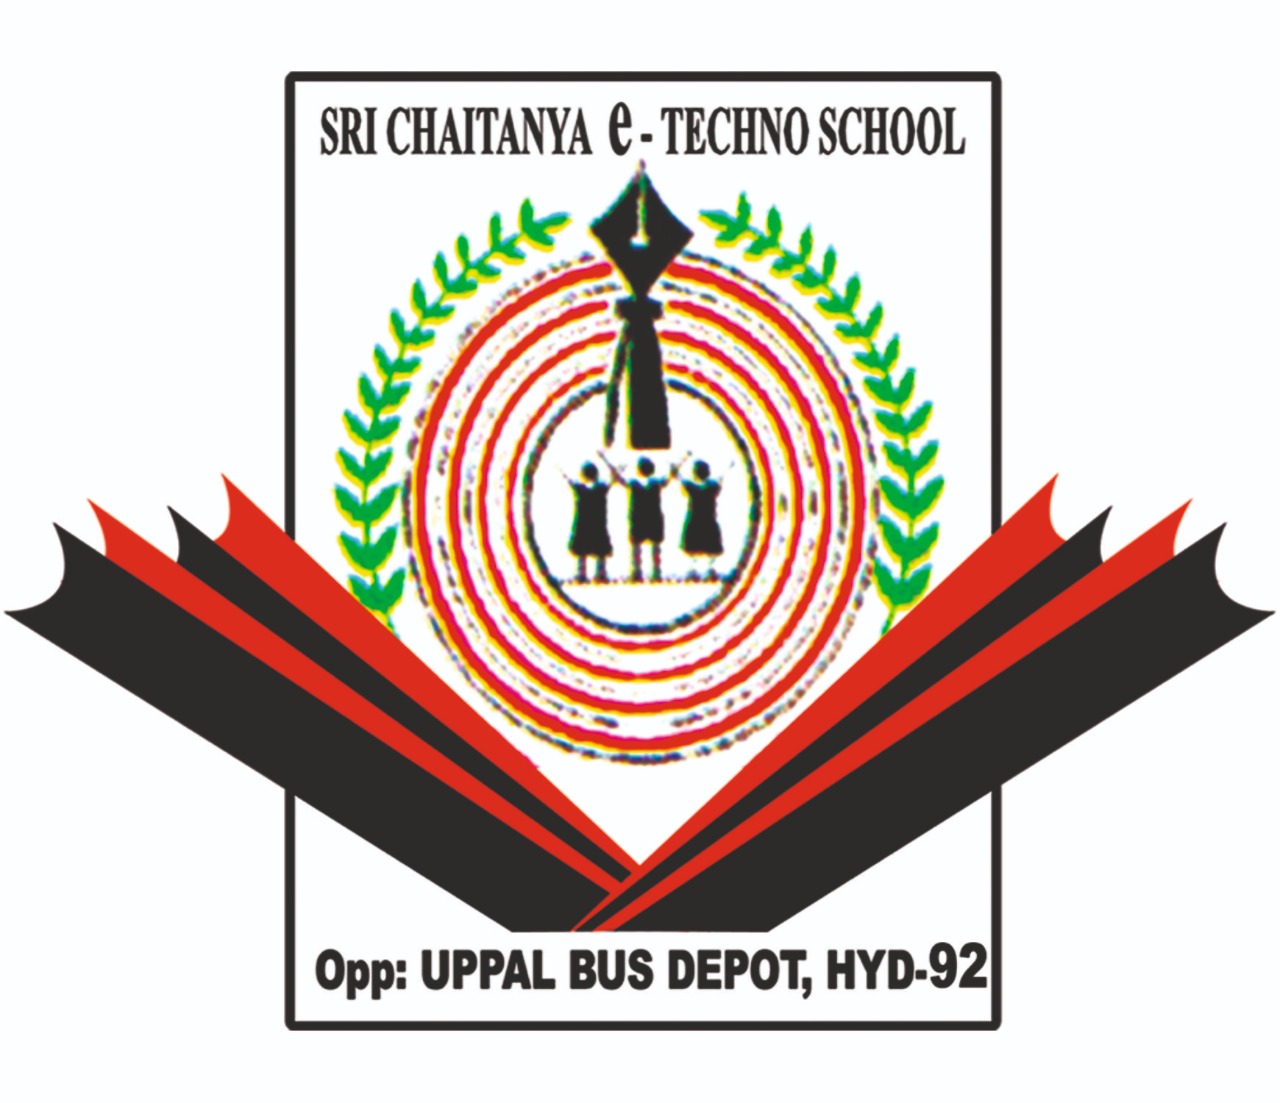 Sri Chaitanya Techno Schools- reviews, fees and all details